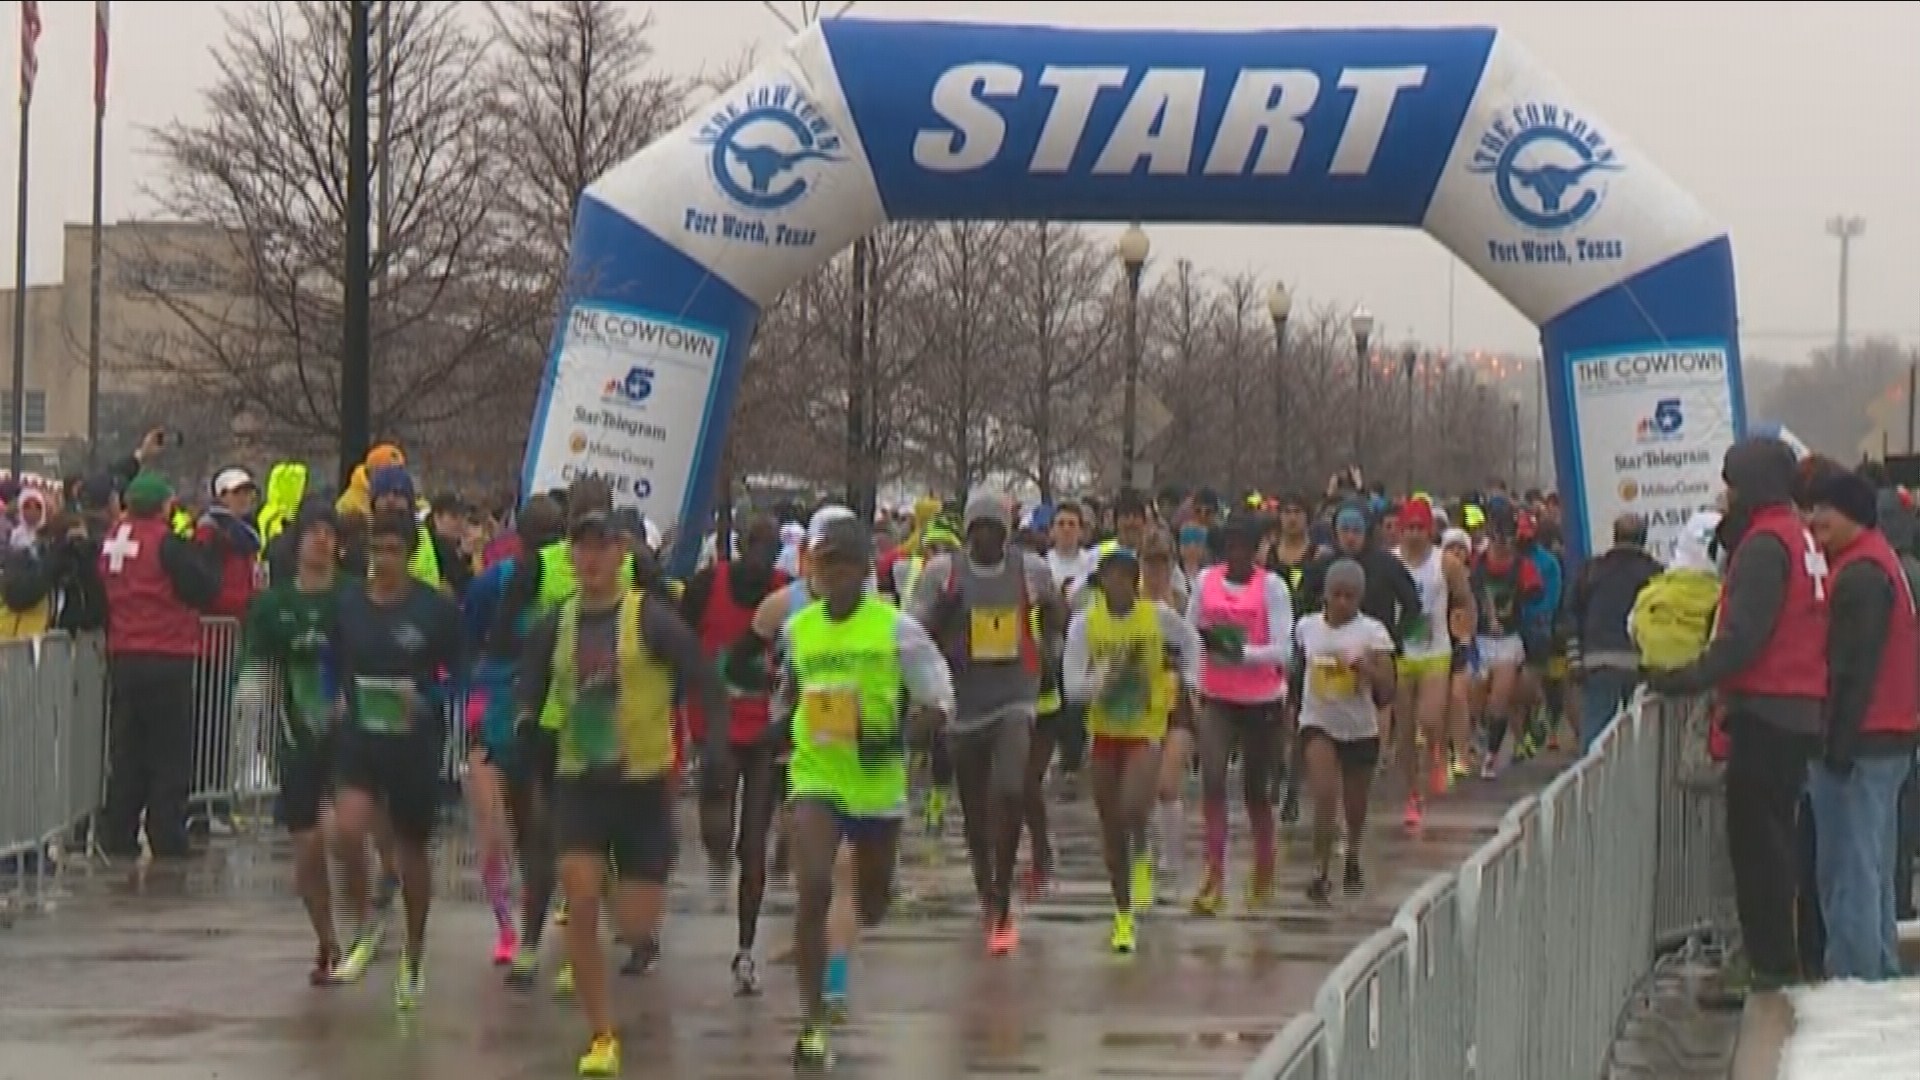 Cowtown runners make the most of half marathon